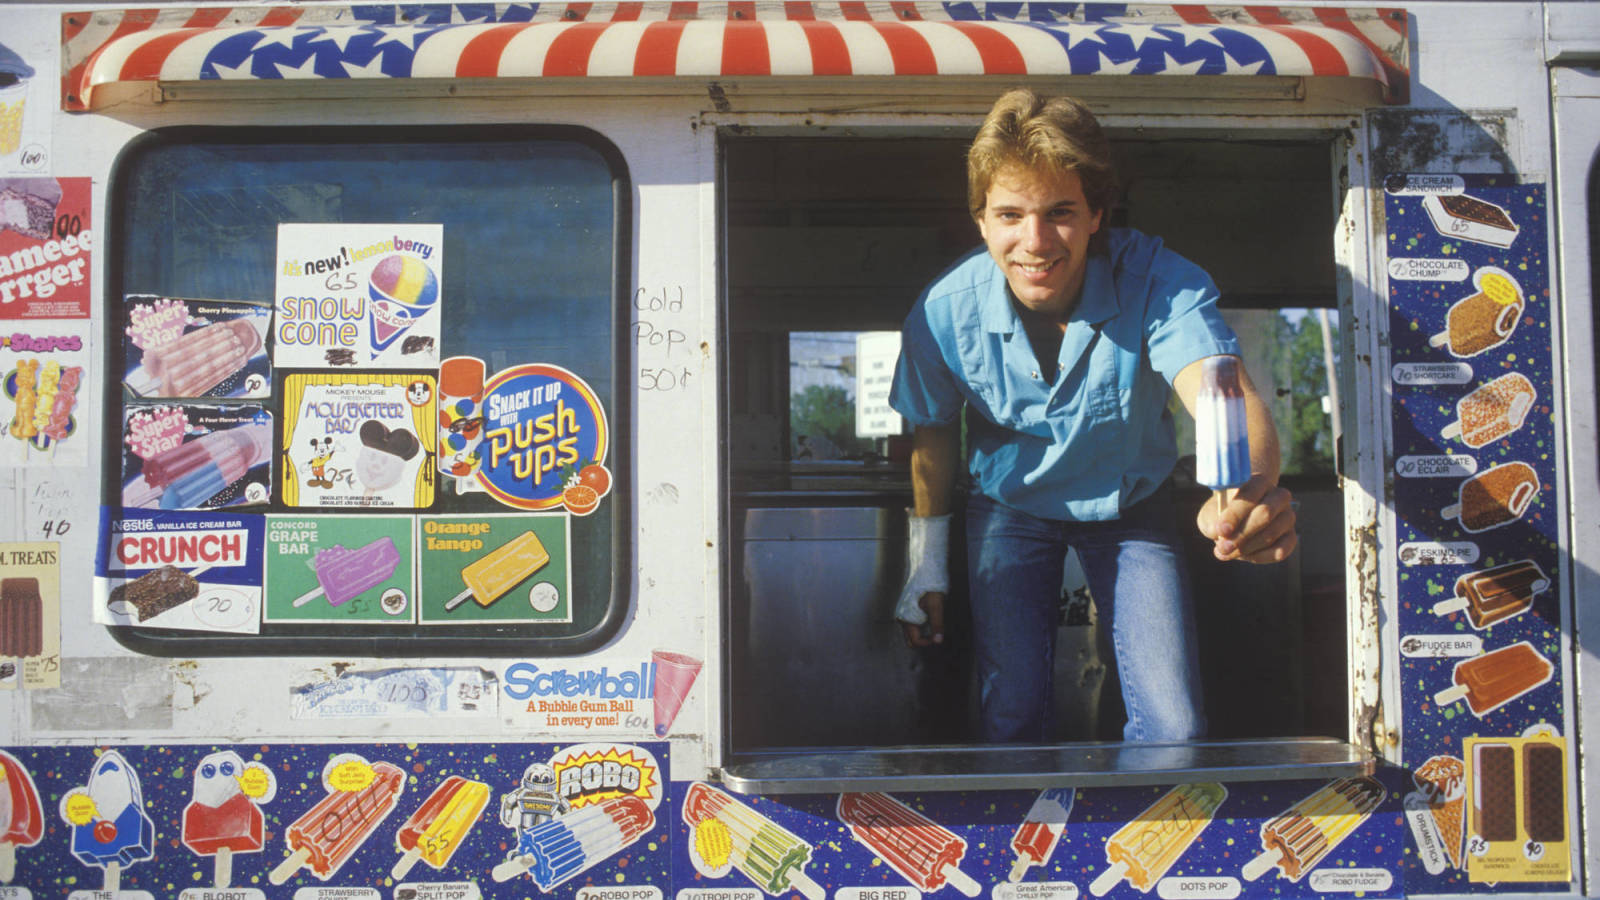 25-classic-ice-cream-truck-treats-probably-forgot.jpg